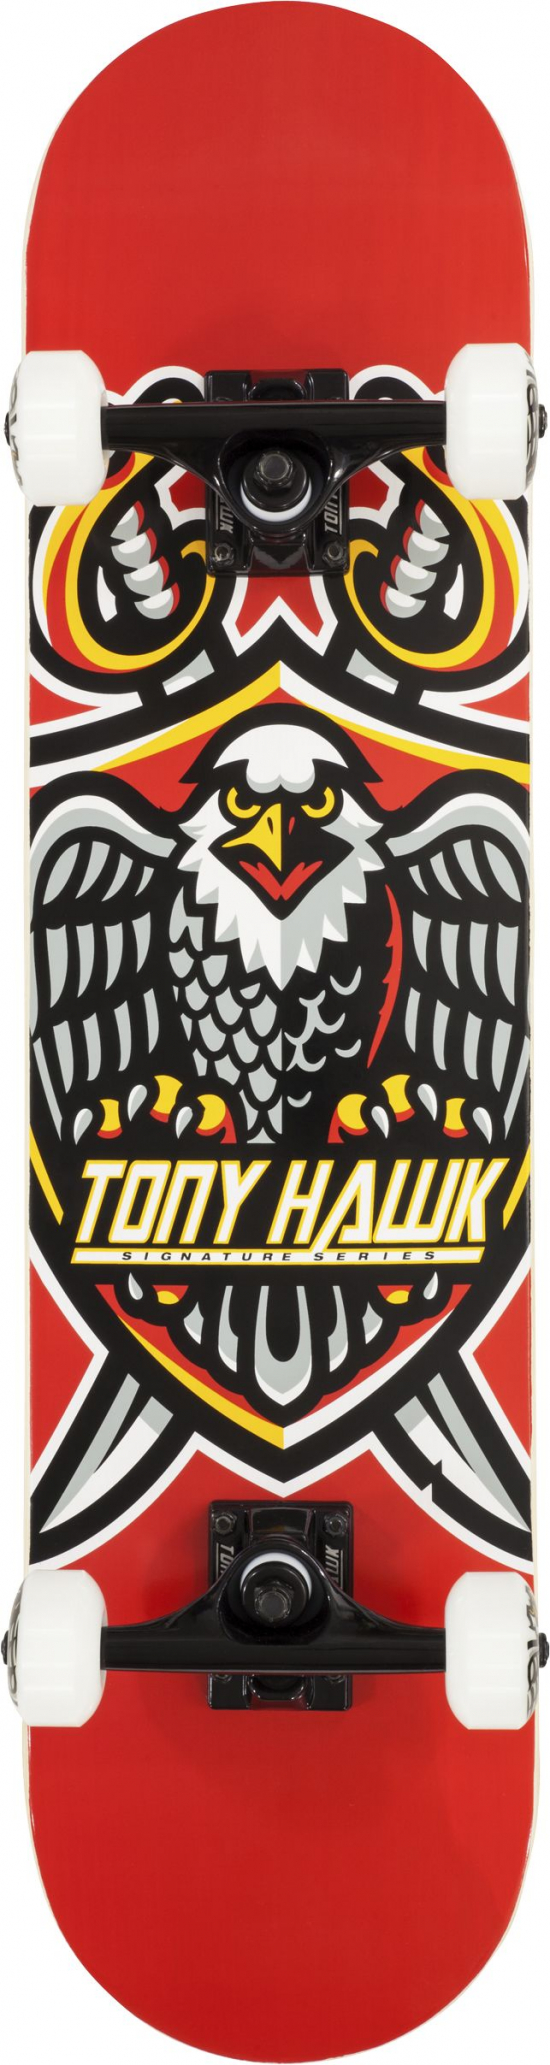 Tony Hawk ss 540 complete touchdown